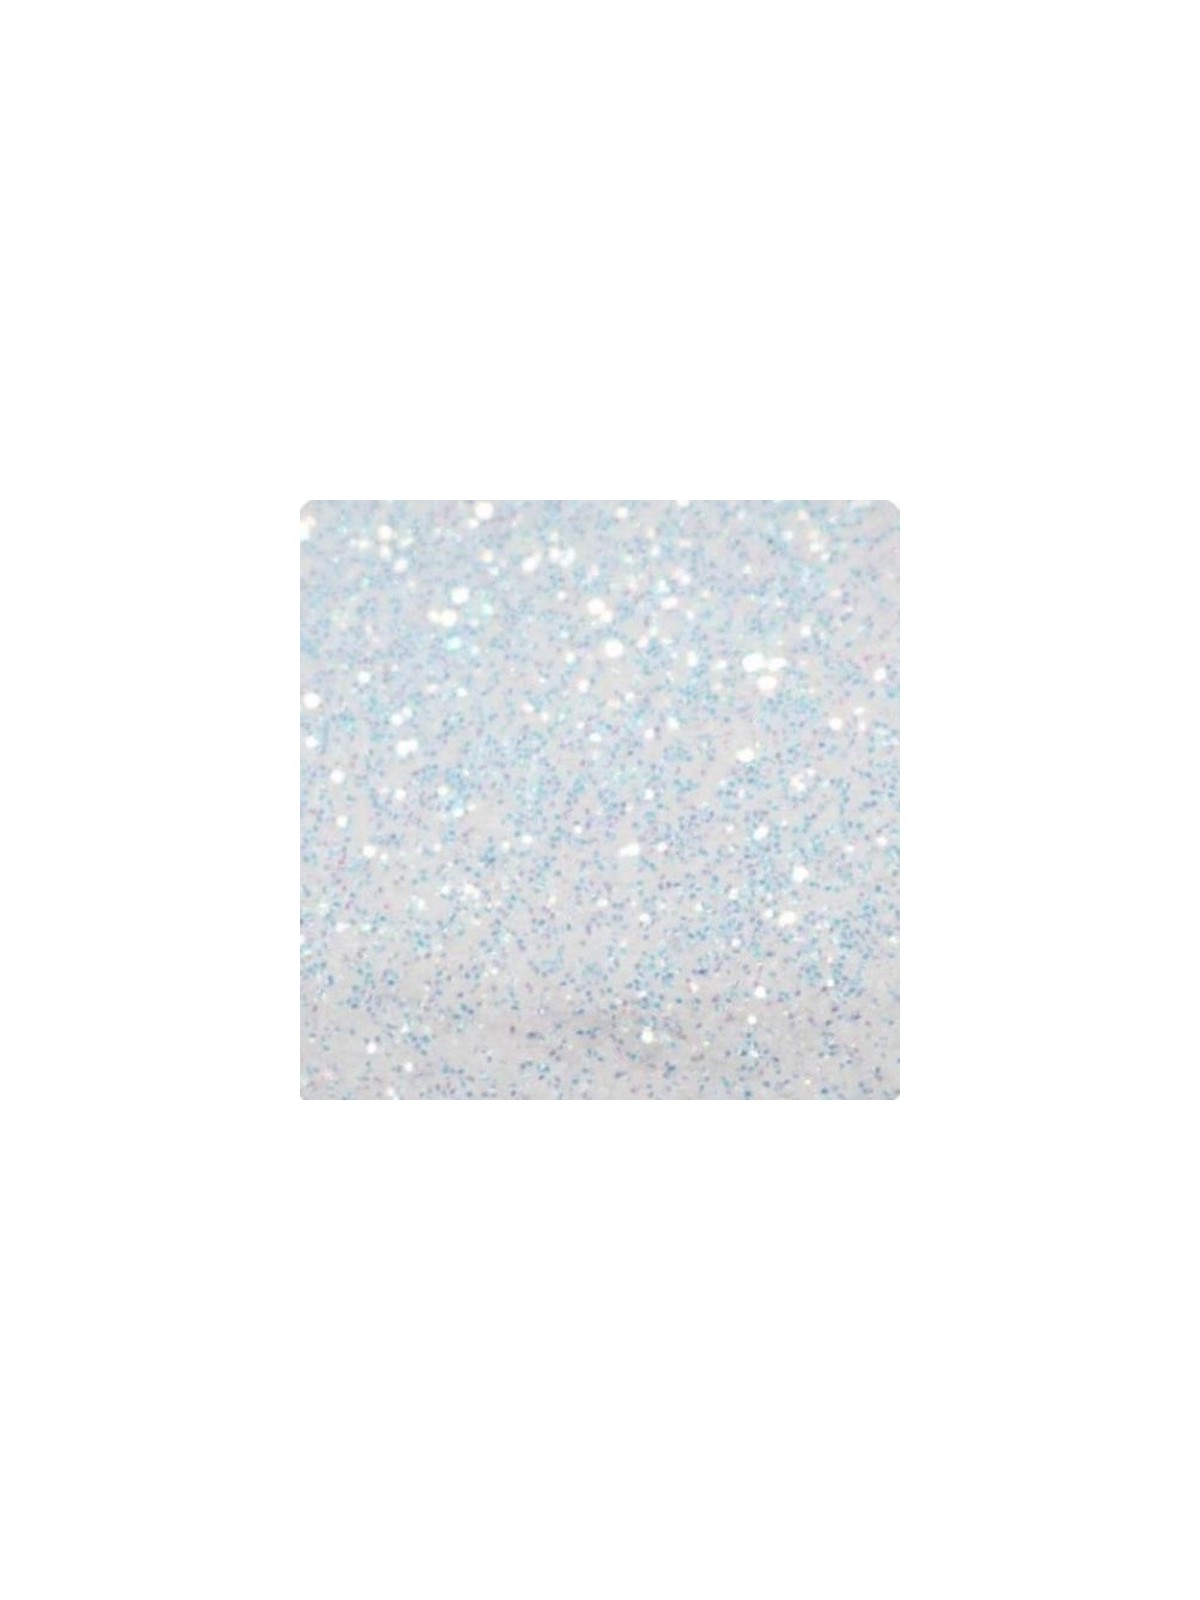 Sugarcity Decorative glitter Crystal glitter 10ml